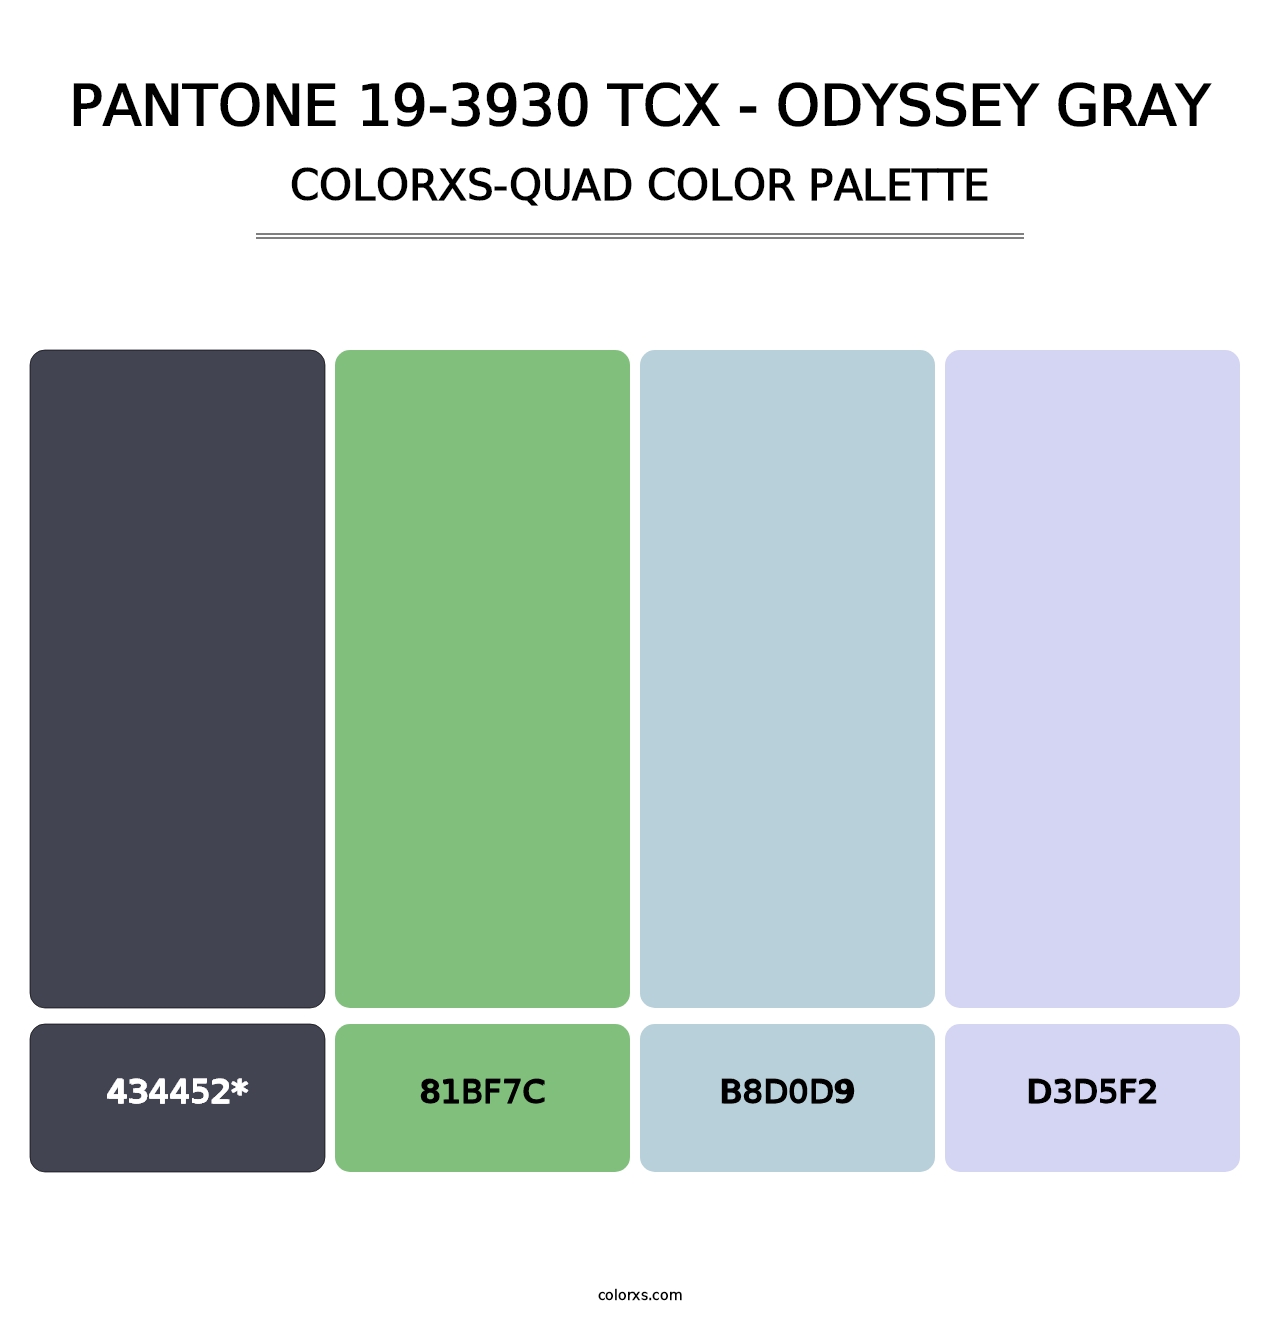 PANTONE 19-3930 TCX - Odyssey Gray - Colorxs Quad Palette